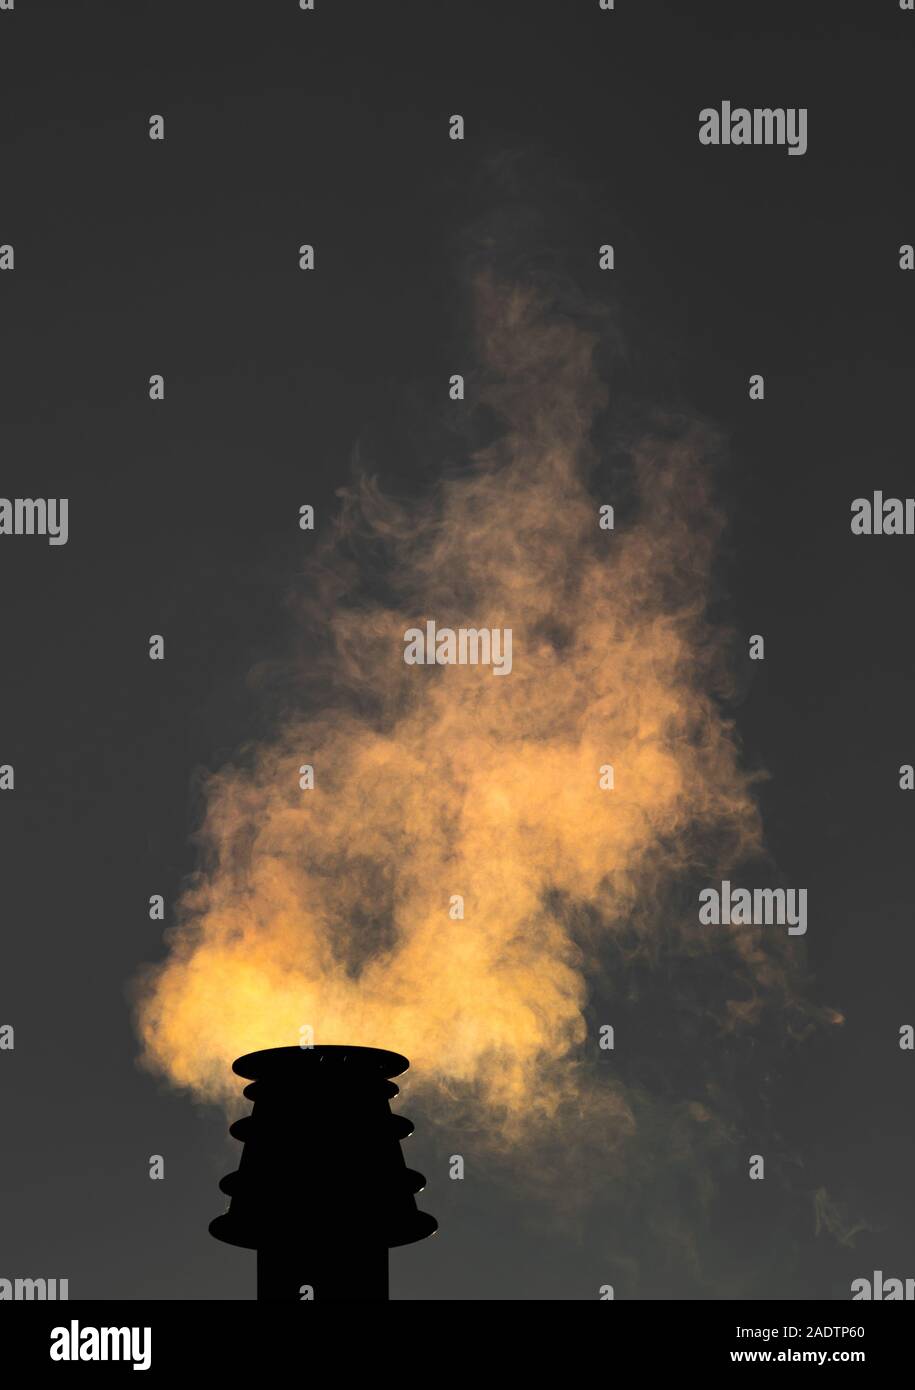 Smoke rising from a small chimney at night. Stock Photo